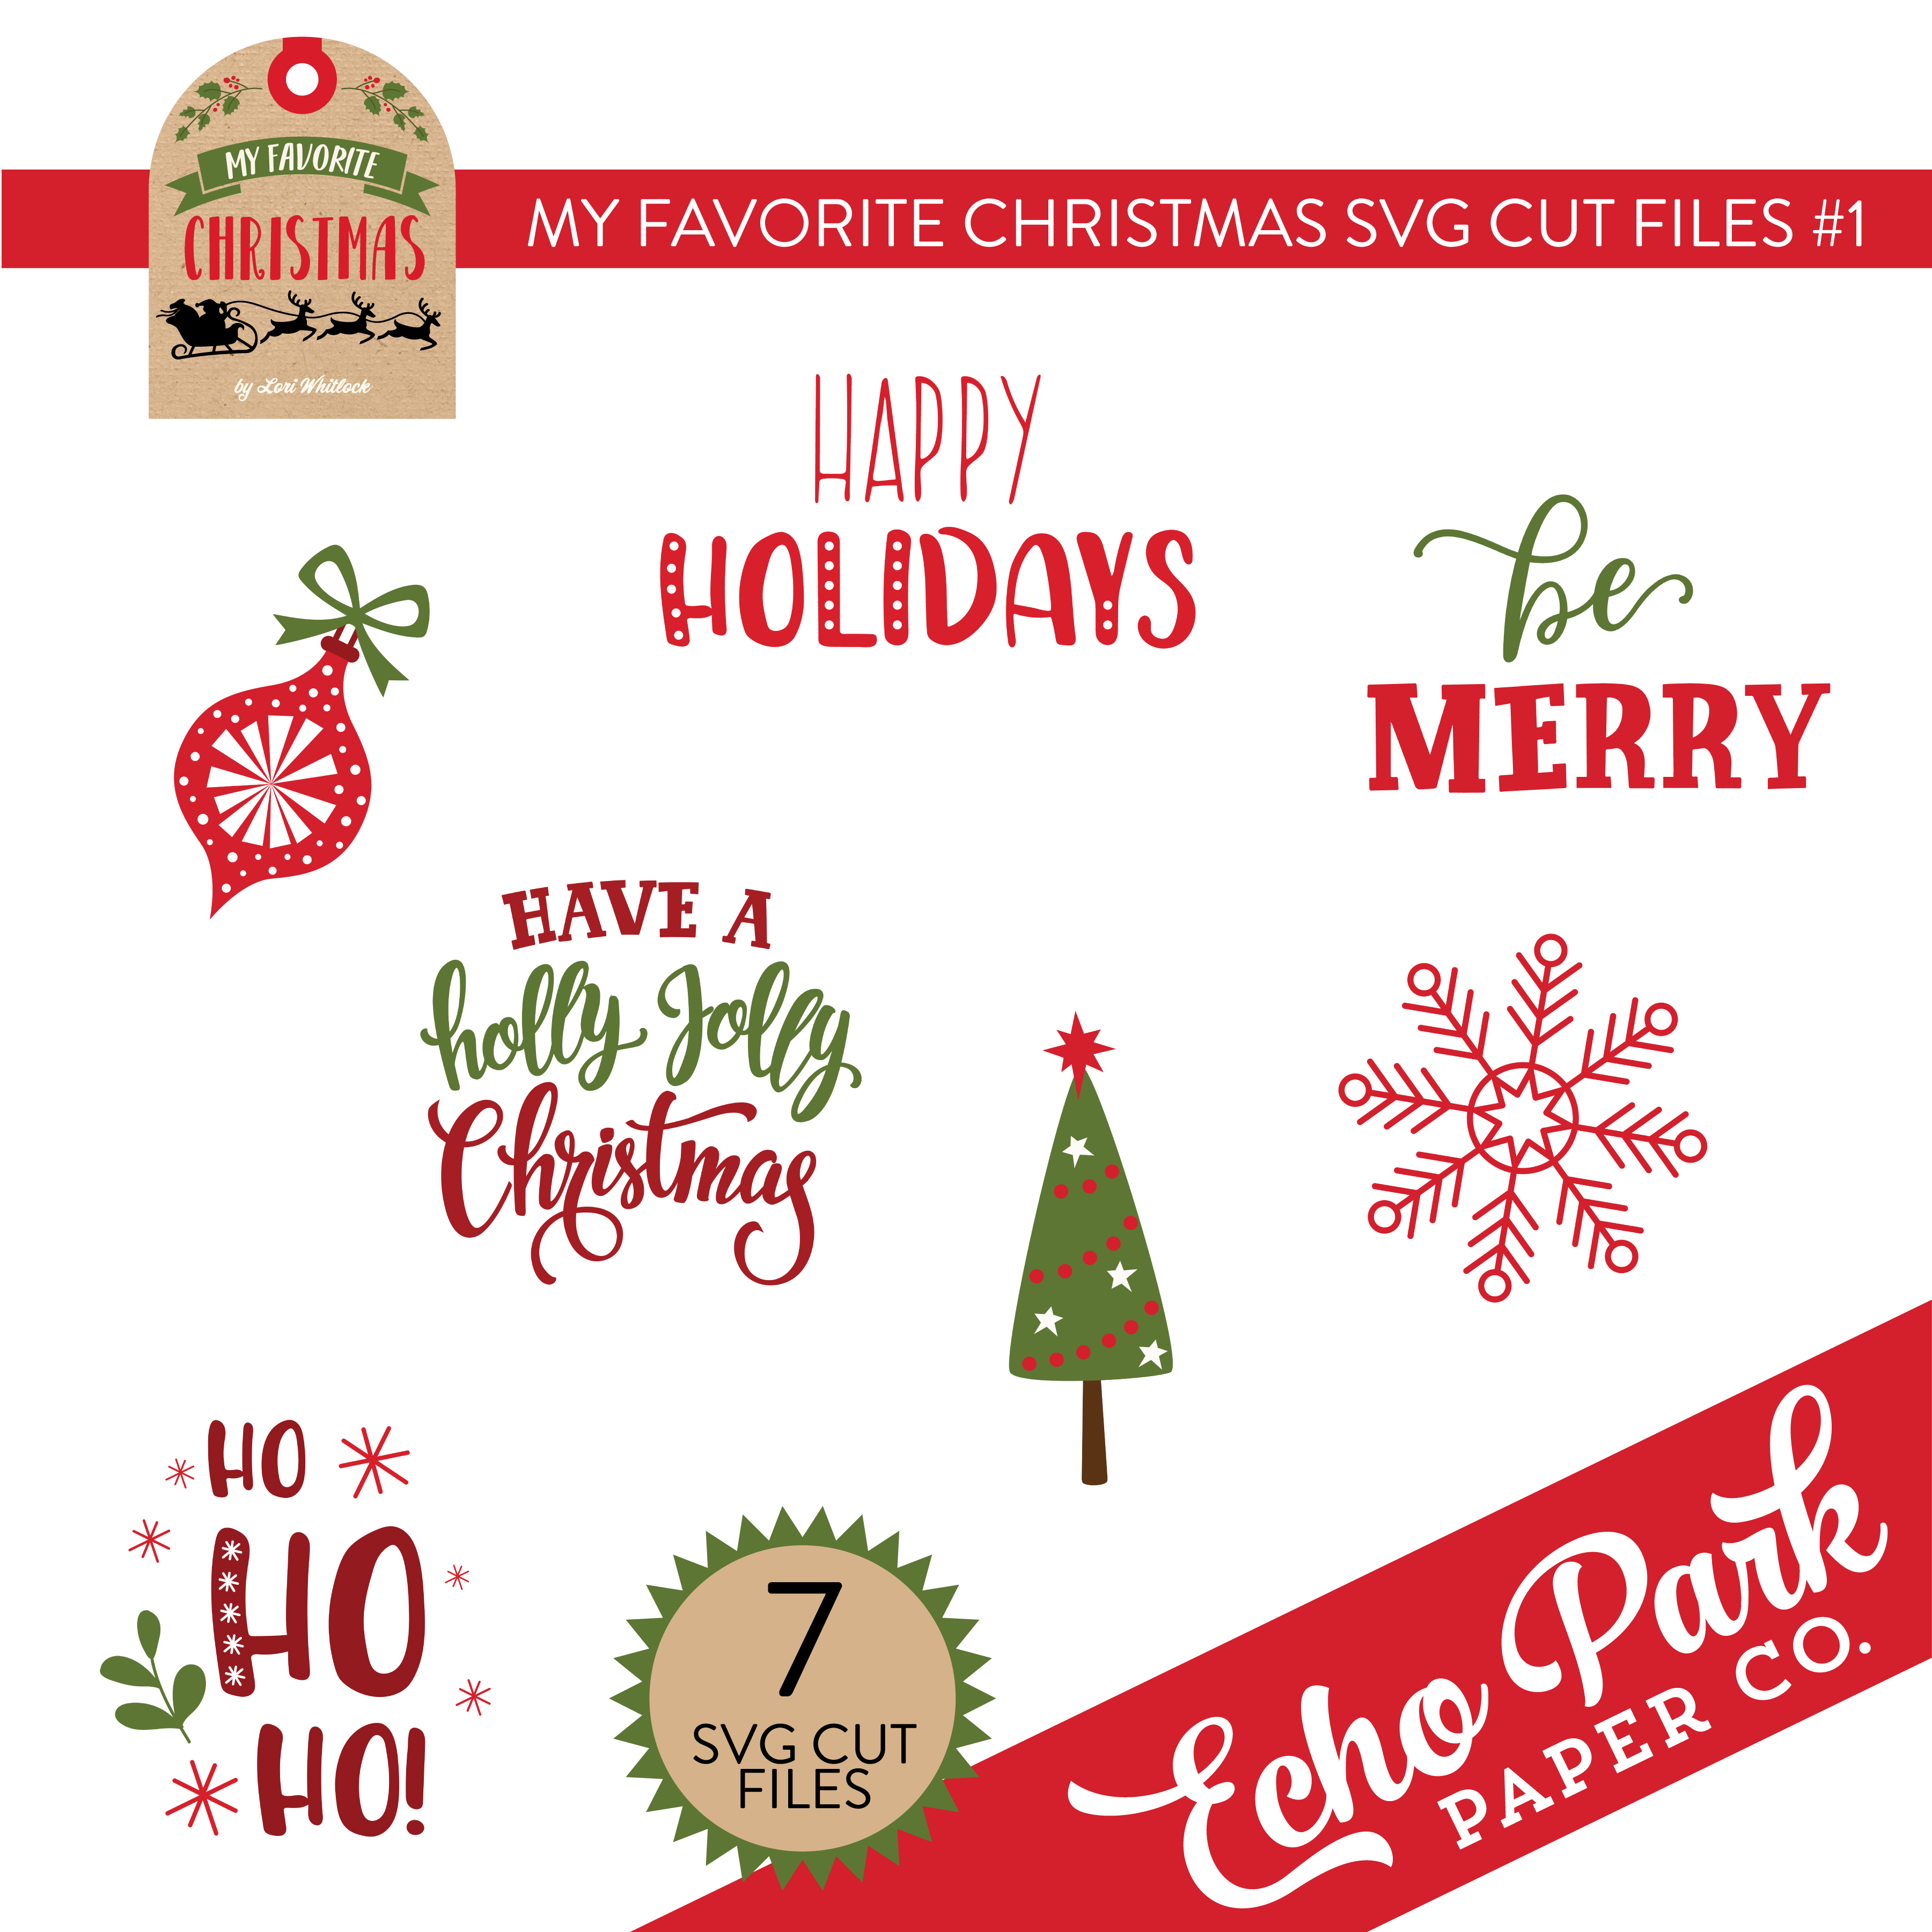 My Favorite Christmas SVG Cut Files #1